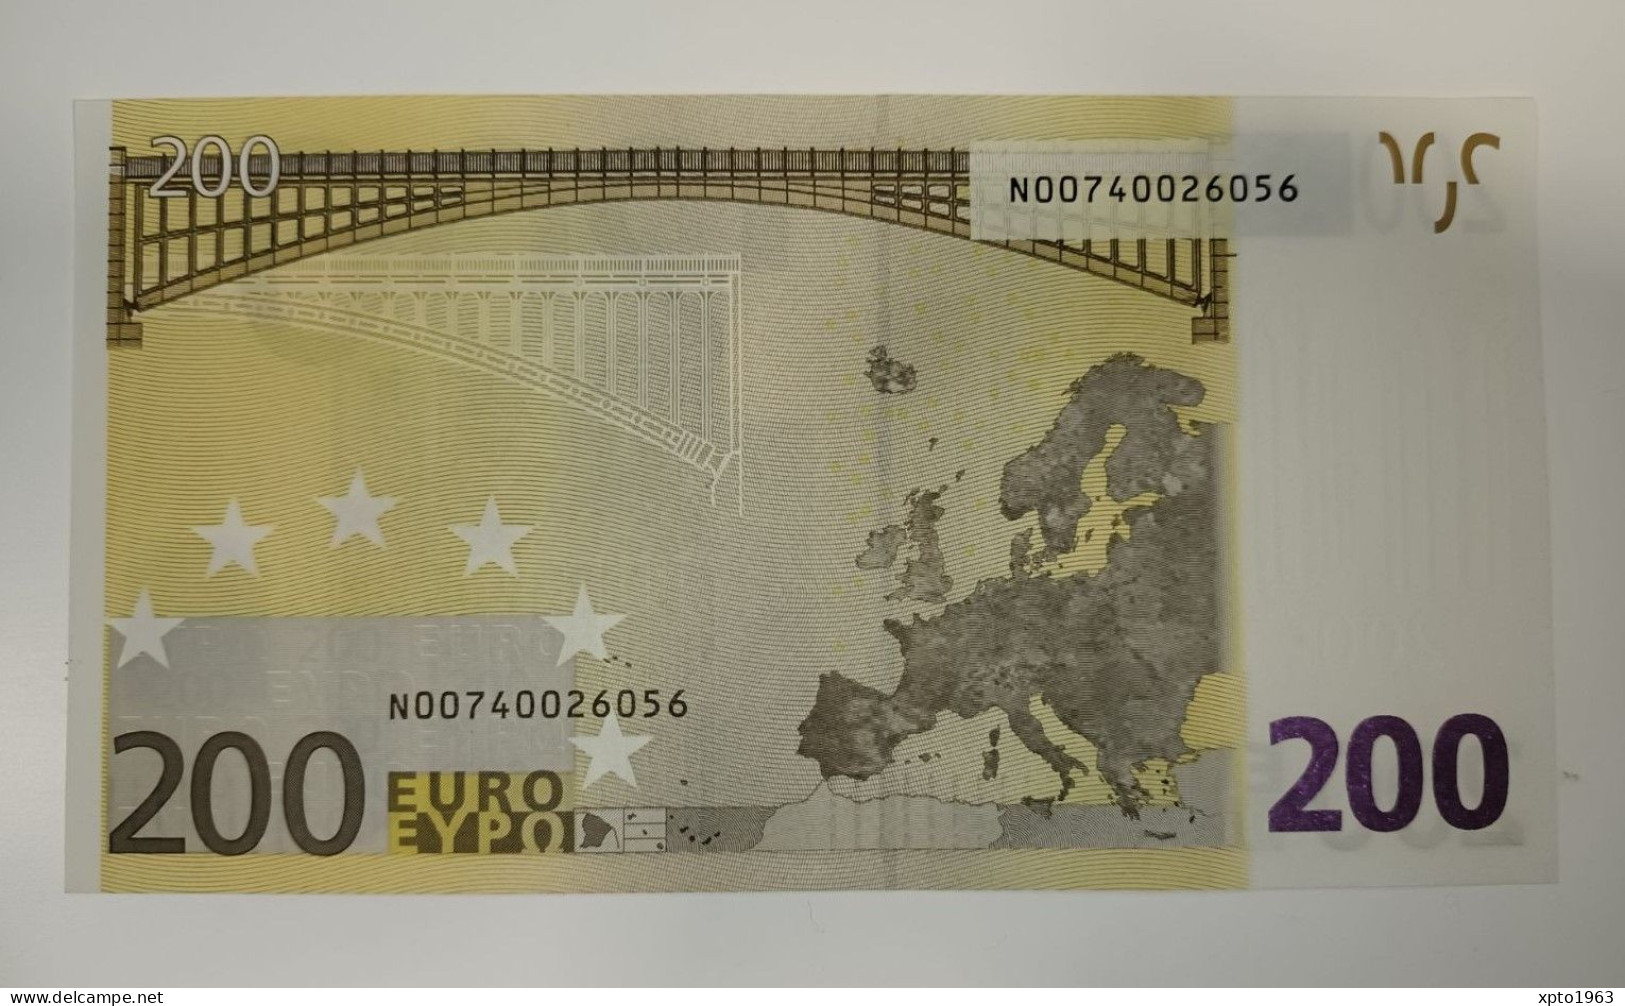 200 EURO - AUSTRIA AUTRICHE ÖSTERREICH - G001 A1 - (N) - N00740026056 - UNC - NEUF - NEW - 200 Euro